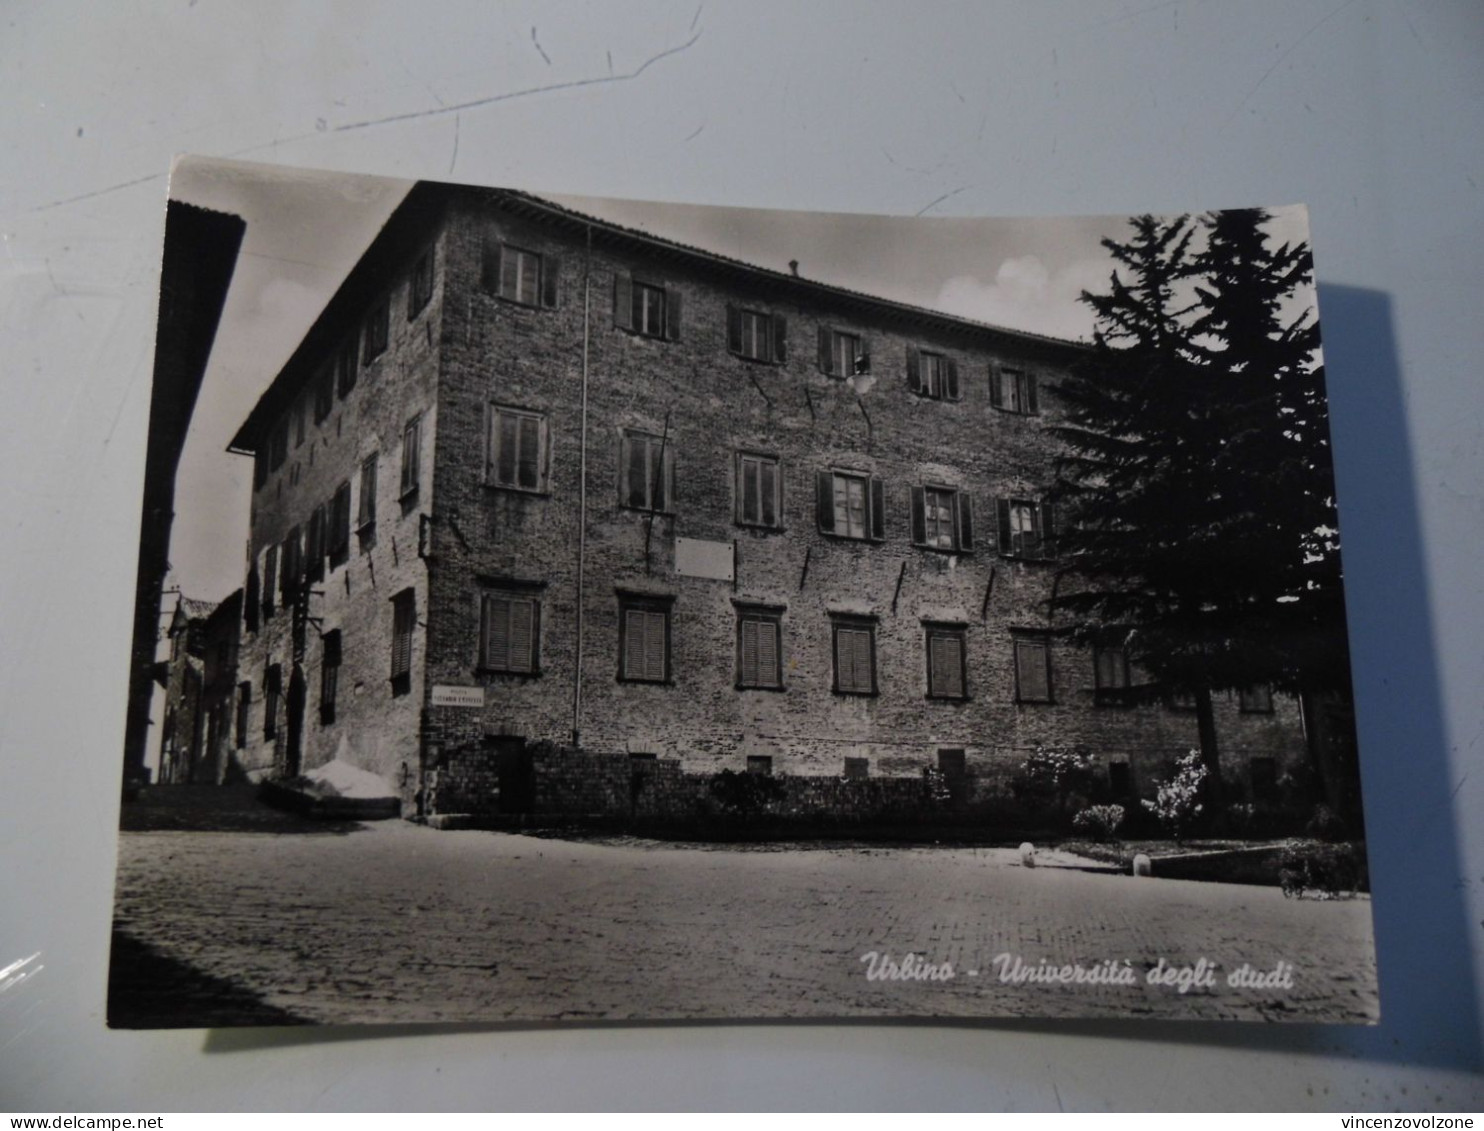 Cartolina Viaggiata "URBINO Università Degli Studi"  1954 - Senigallia